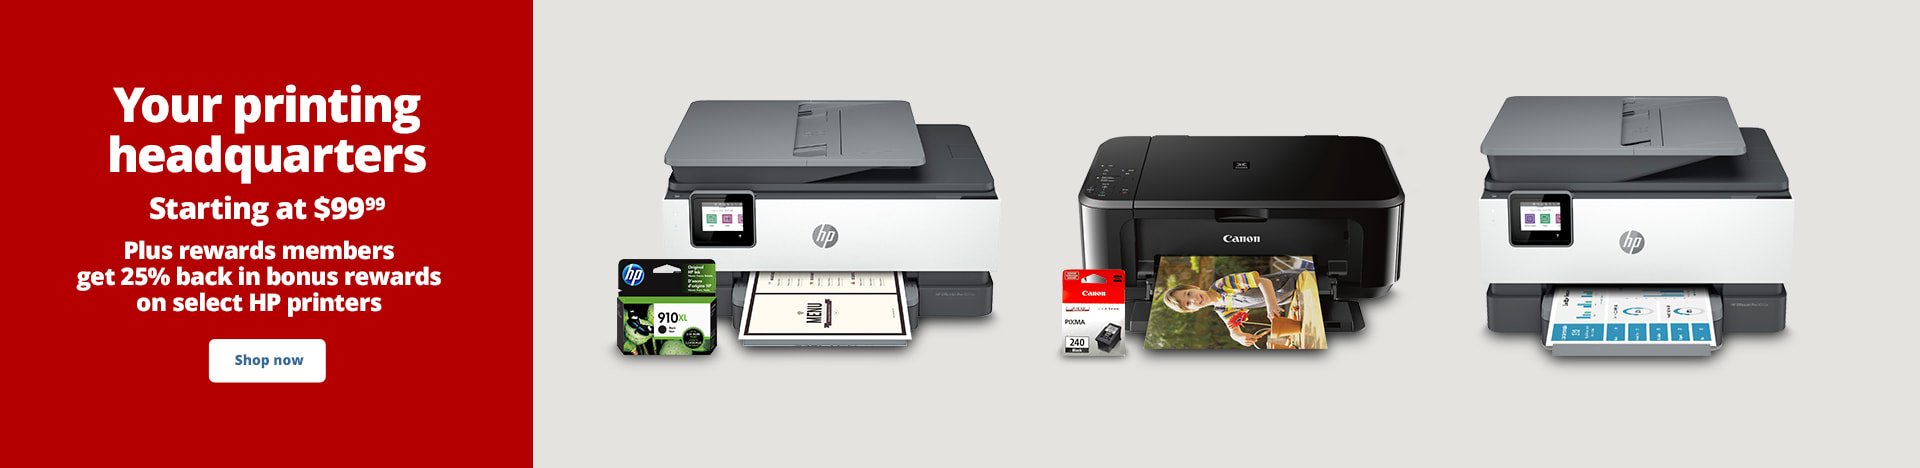 Your printing headquarters Starting at $99.99 + rewards members get 25% back in bonus rewards on select HP printers